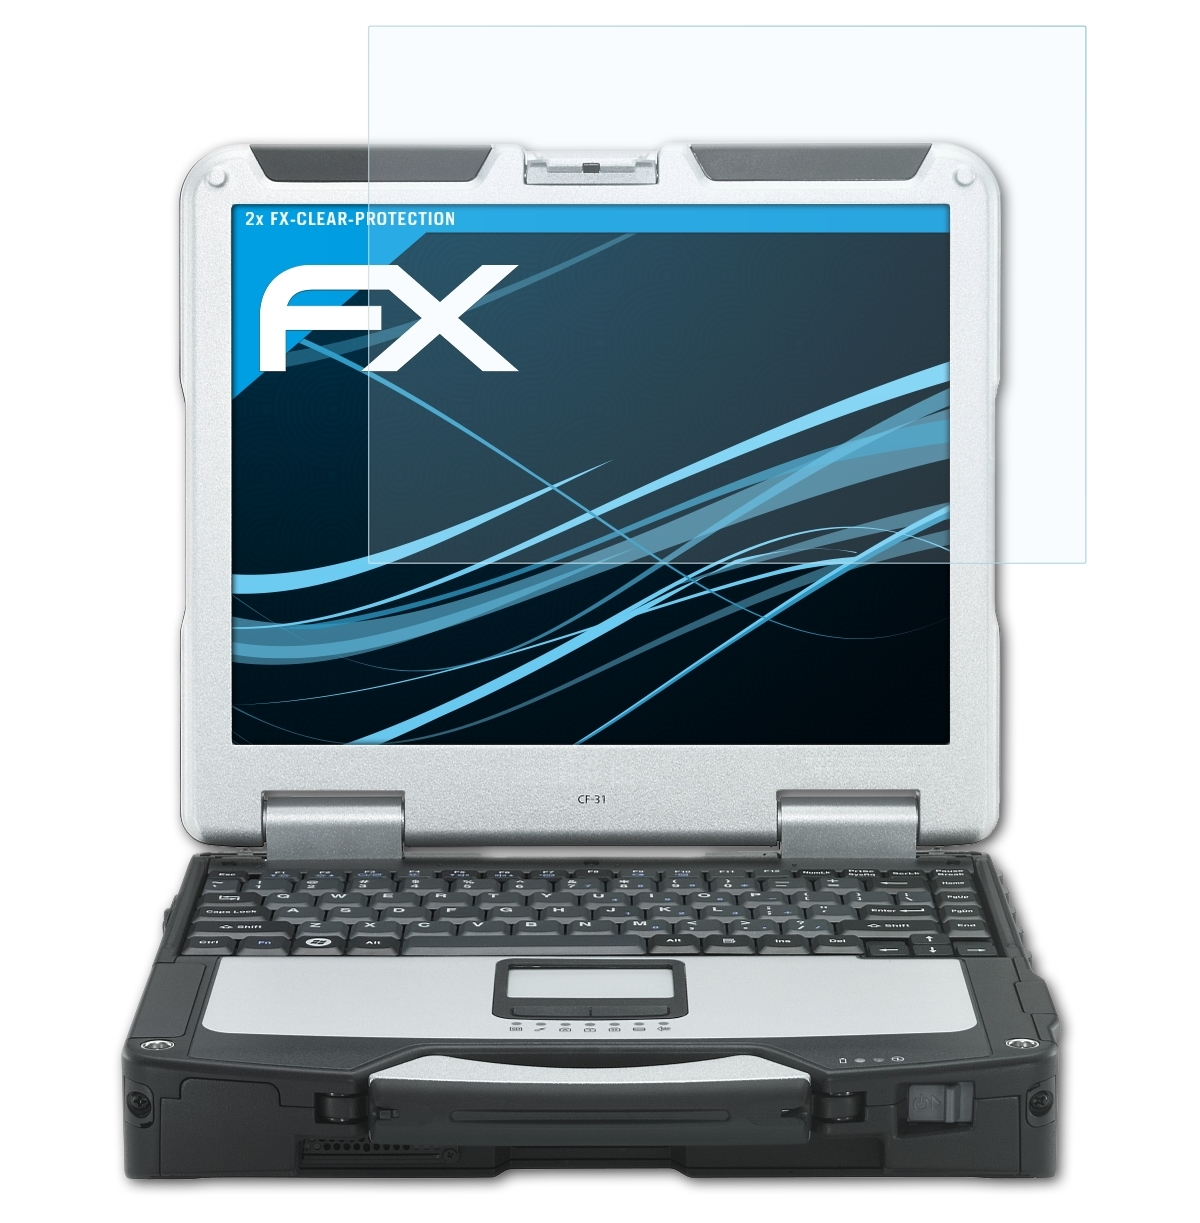 ATFOLIX 2x Panasonic CF-31) FX-Clear ToughBook Displayschutz(für